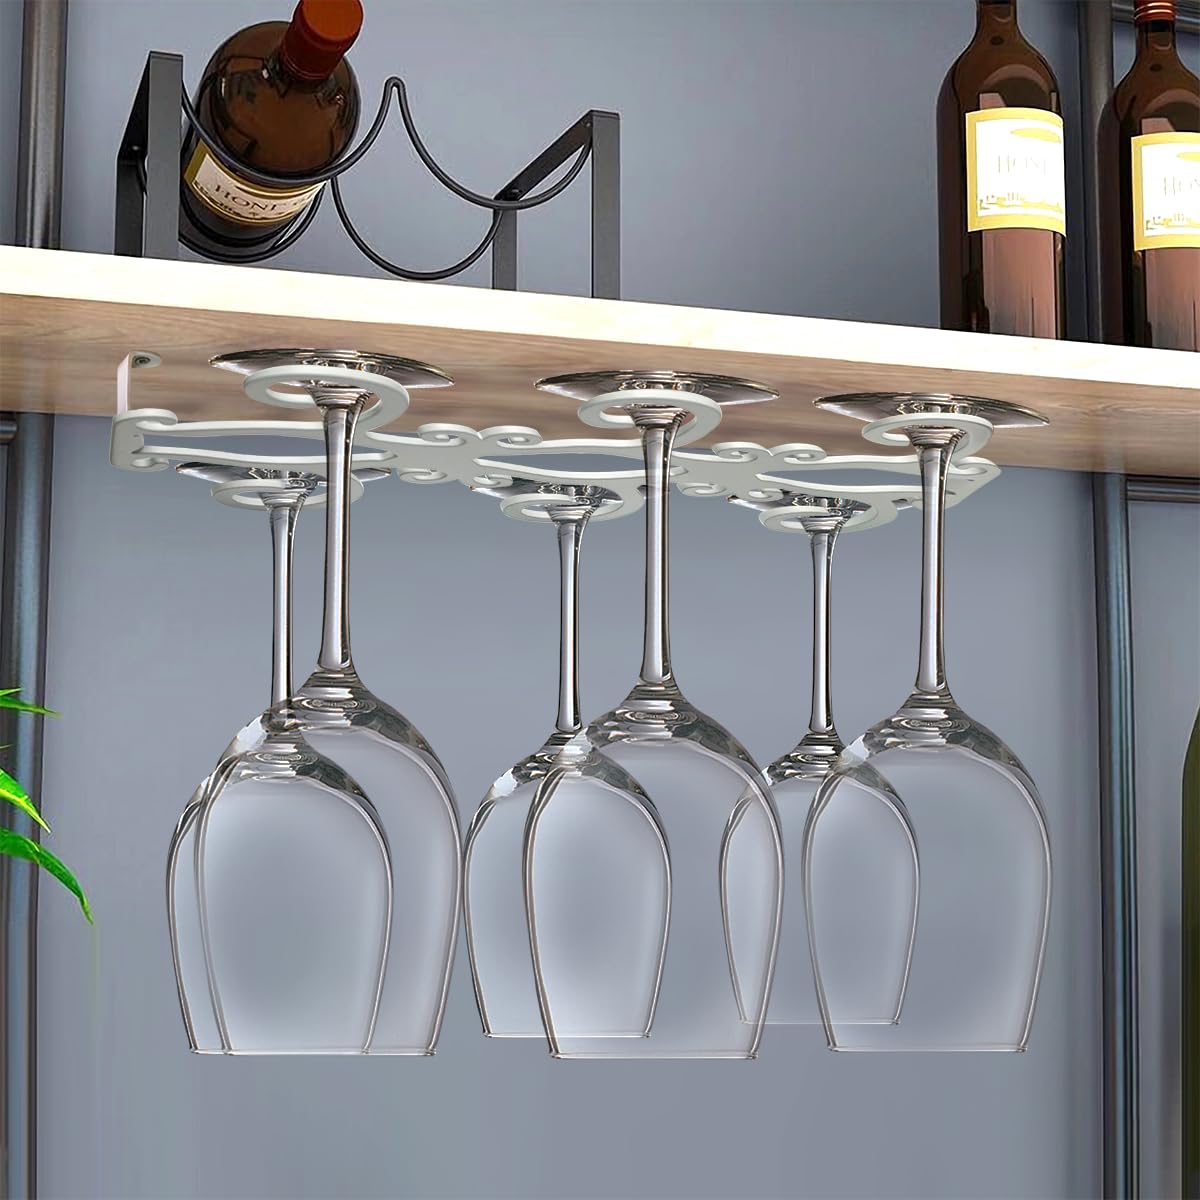 GeLive Under Cabinet Wine Glass Holder Stemware Rack 6 Hook Wine Glass Hanger Space Saver Storage Organizer for Kitchen and Bar Butterfly Shape (White)